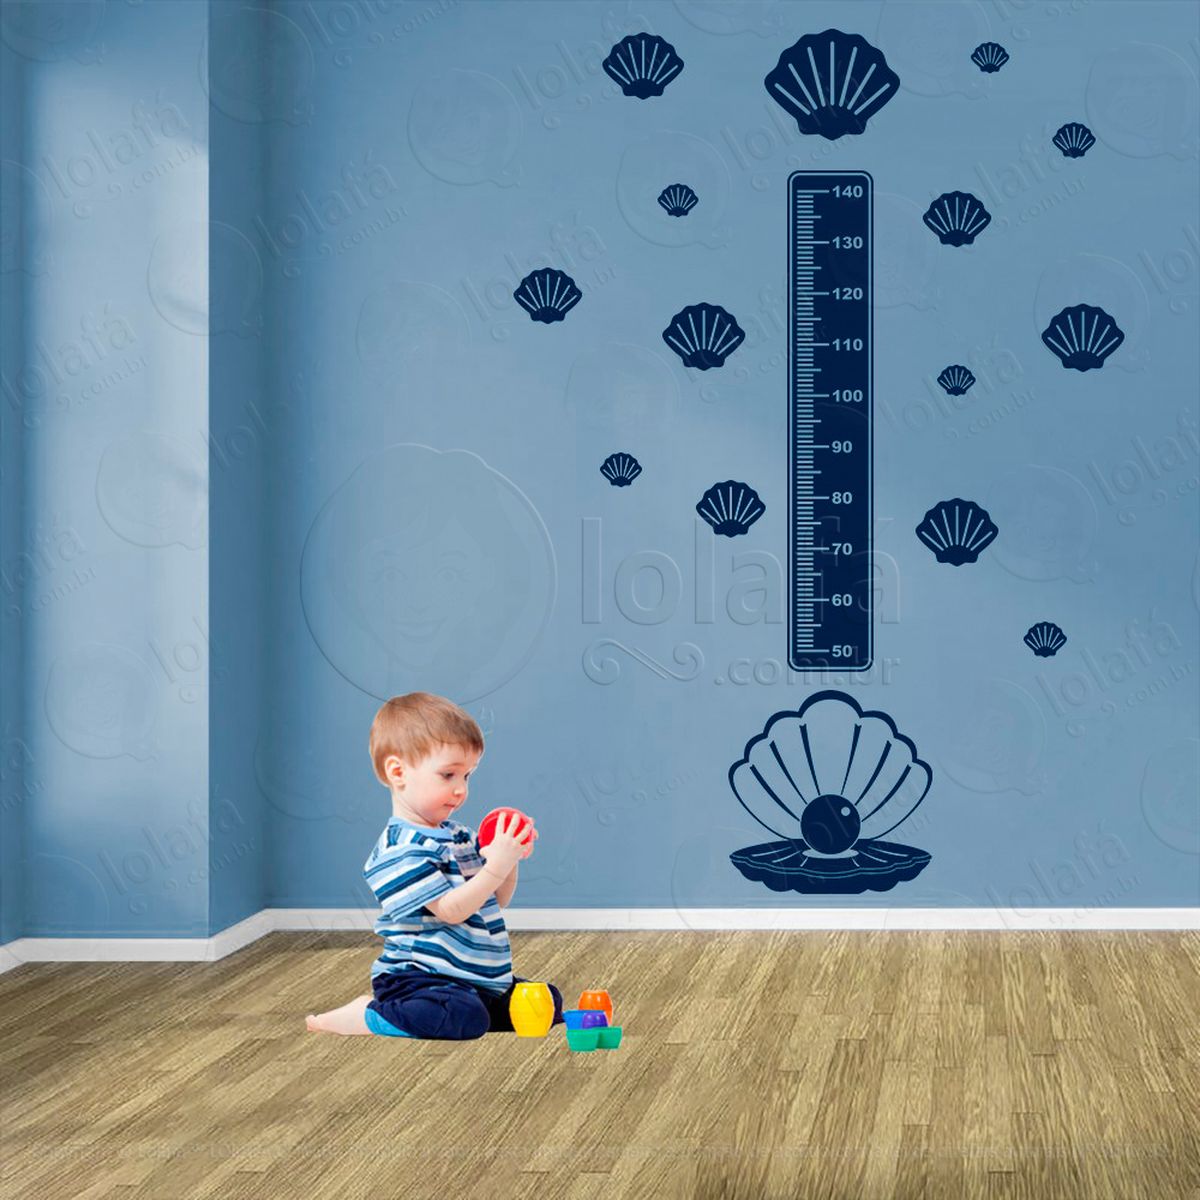 concha e conchas adesivo régua de crescimento infantil, medidor de altura para quarto, porta e parede - mod:146